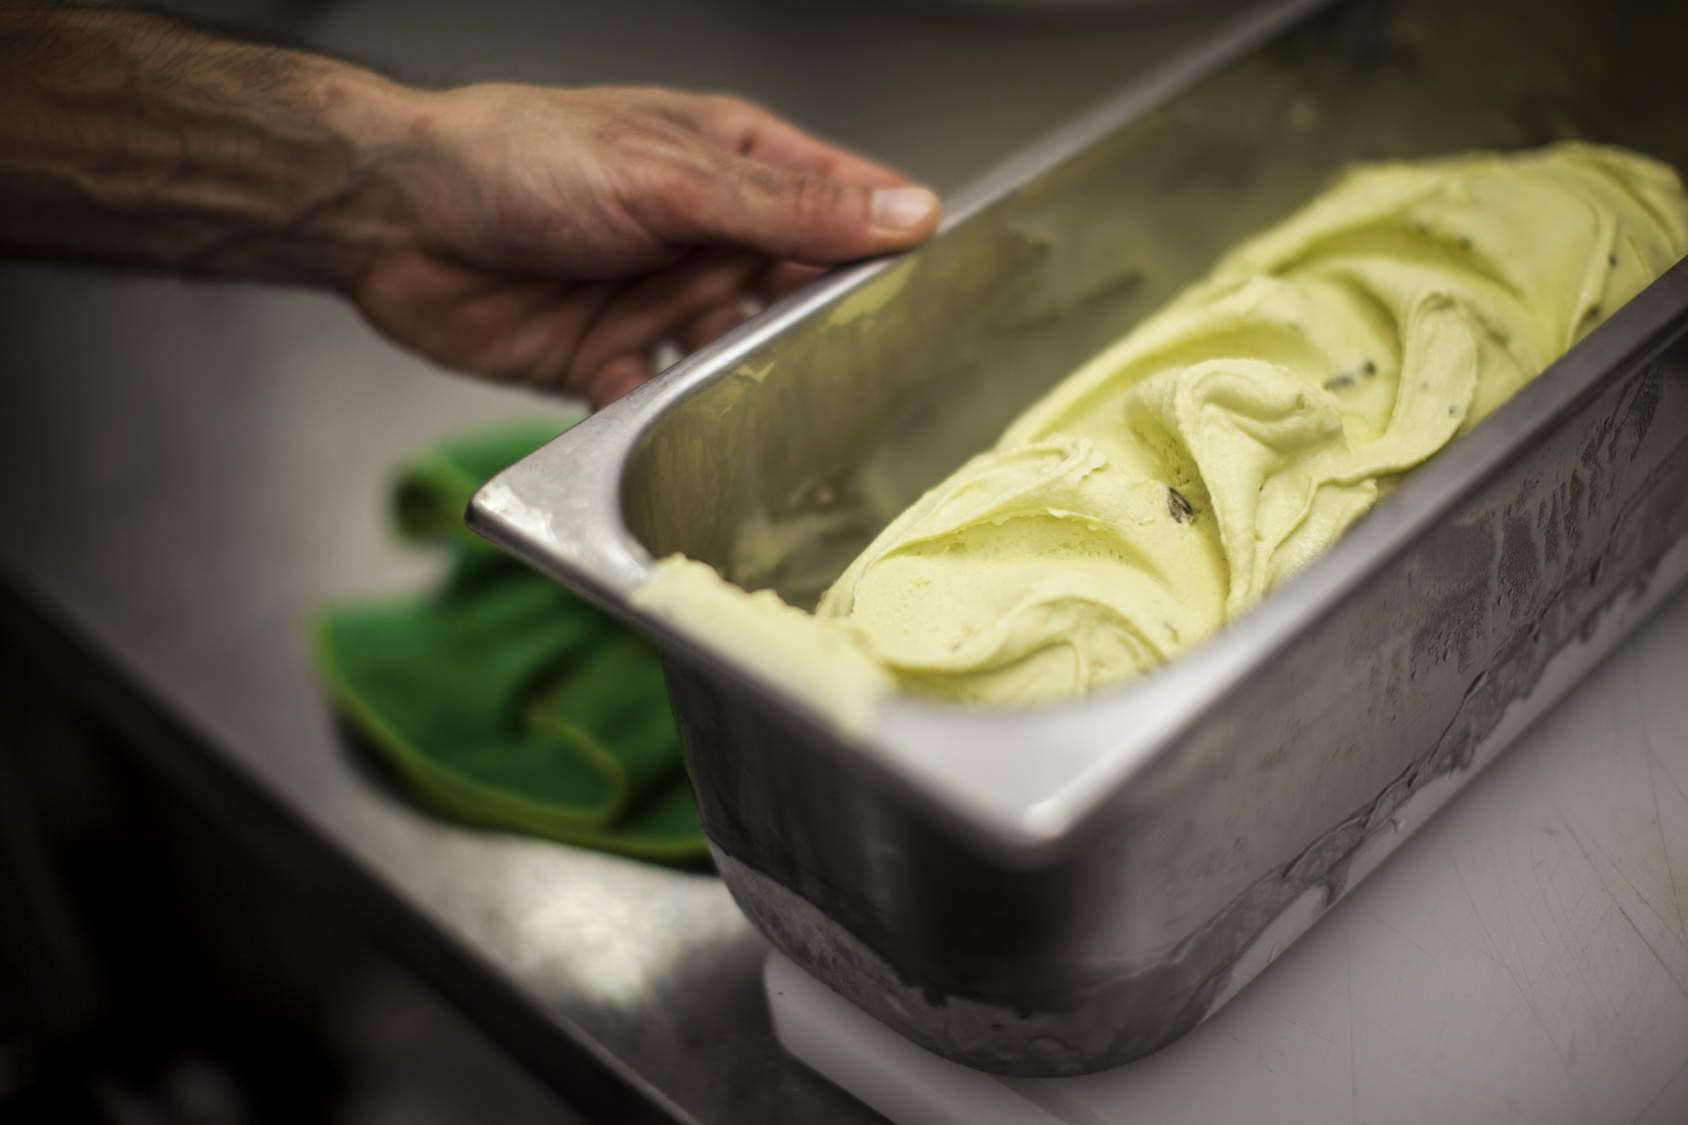 Vaschetta gelato al pistacchio